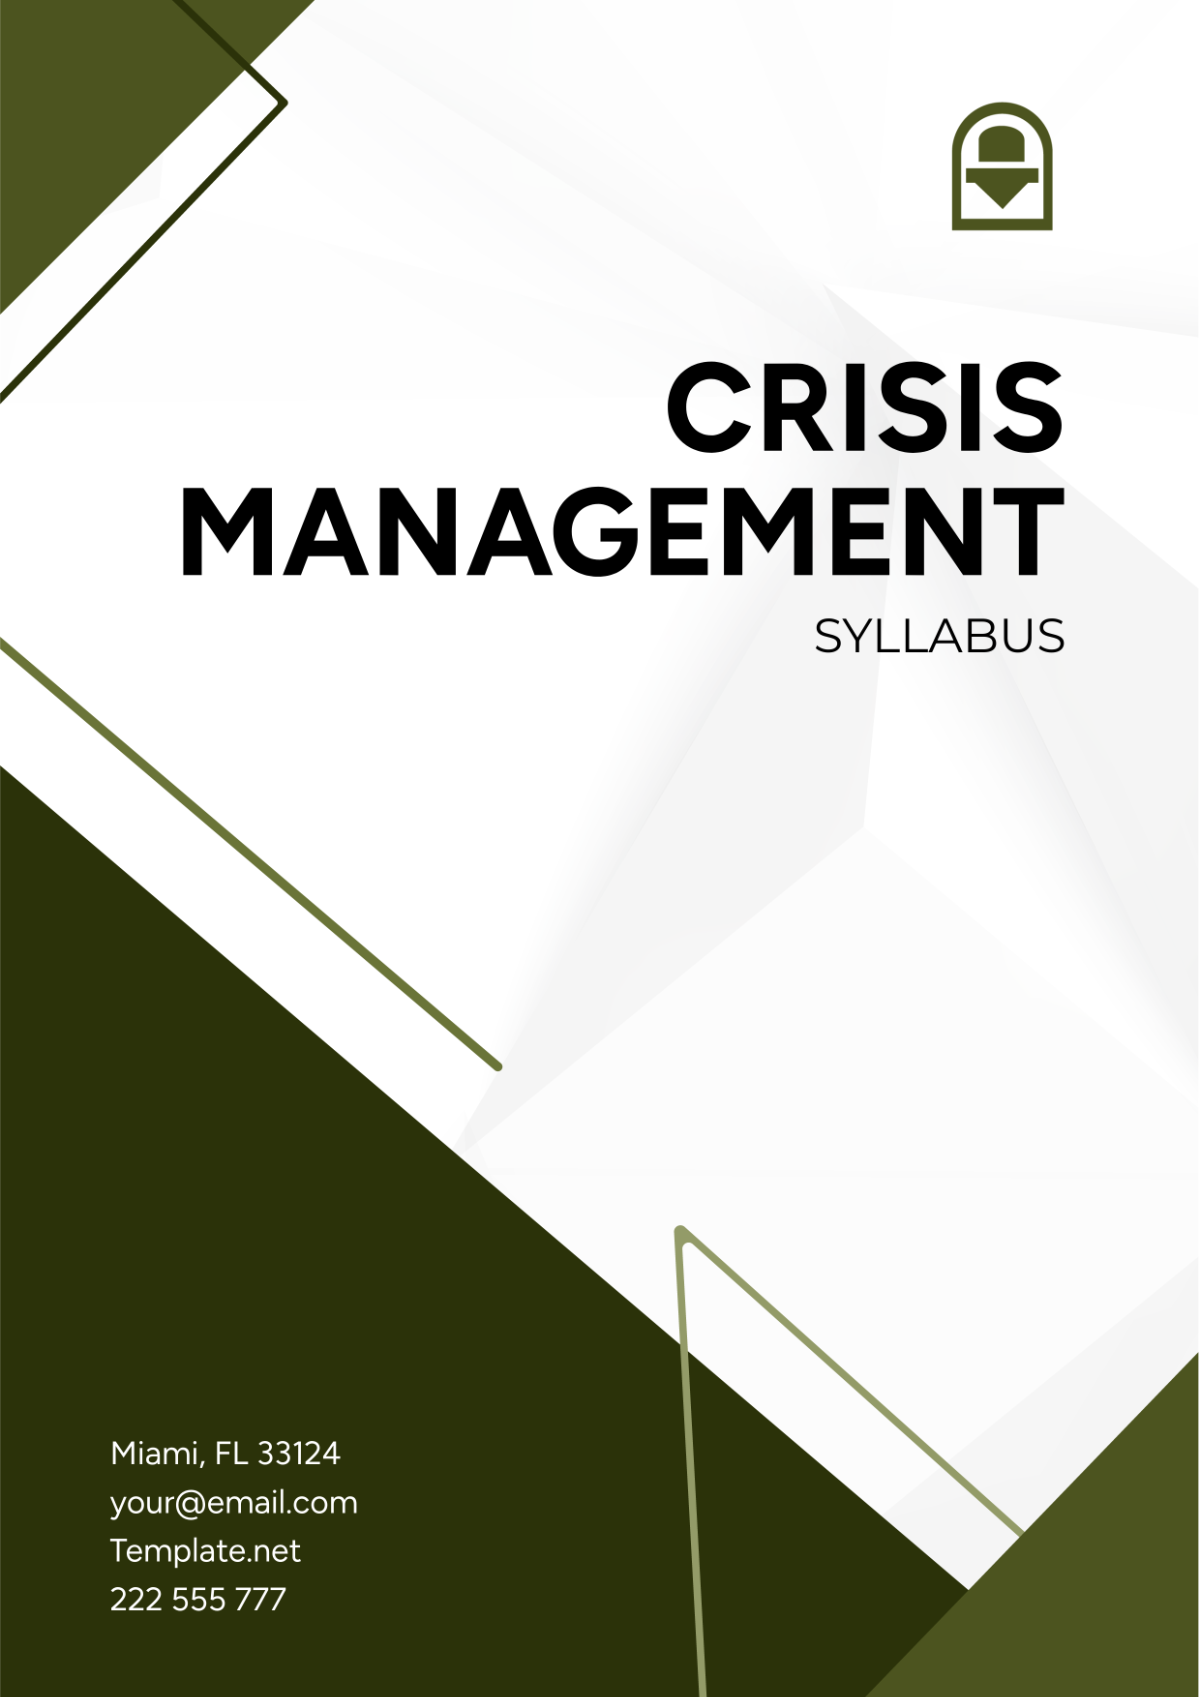 Crisis Management Syllabus Template